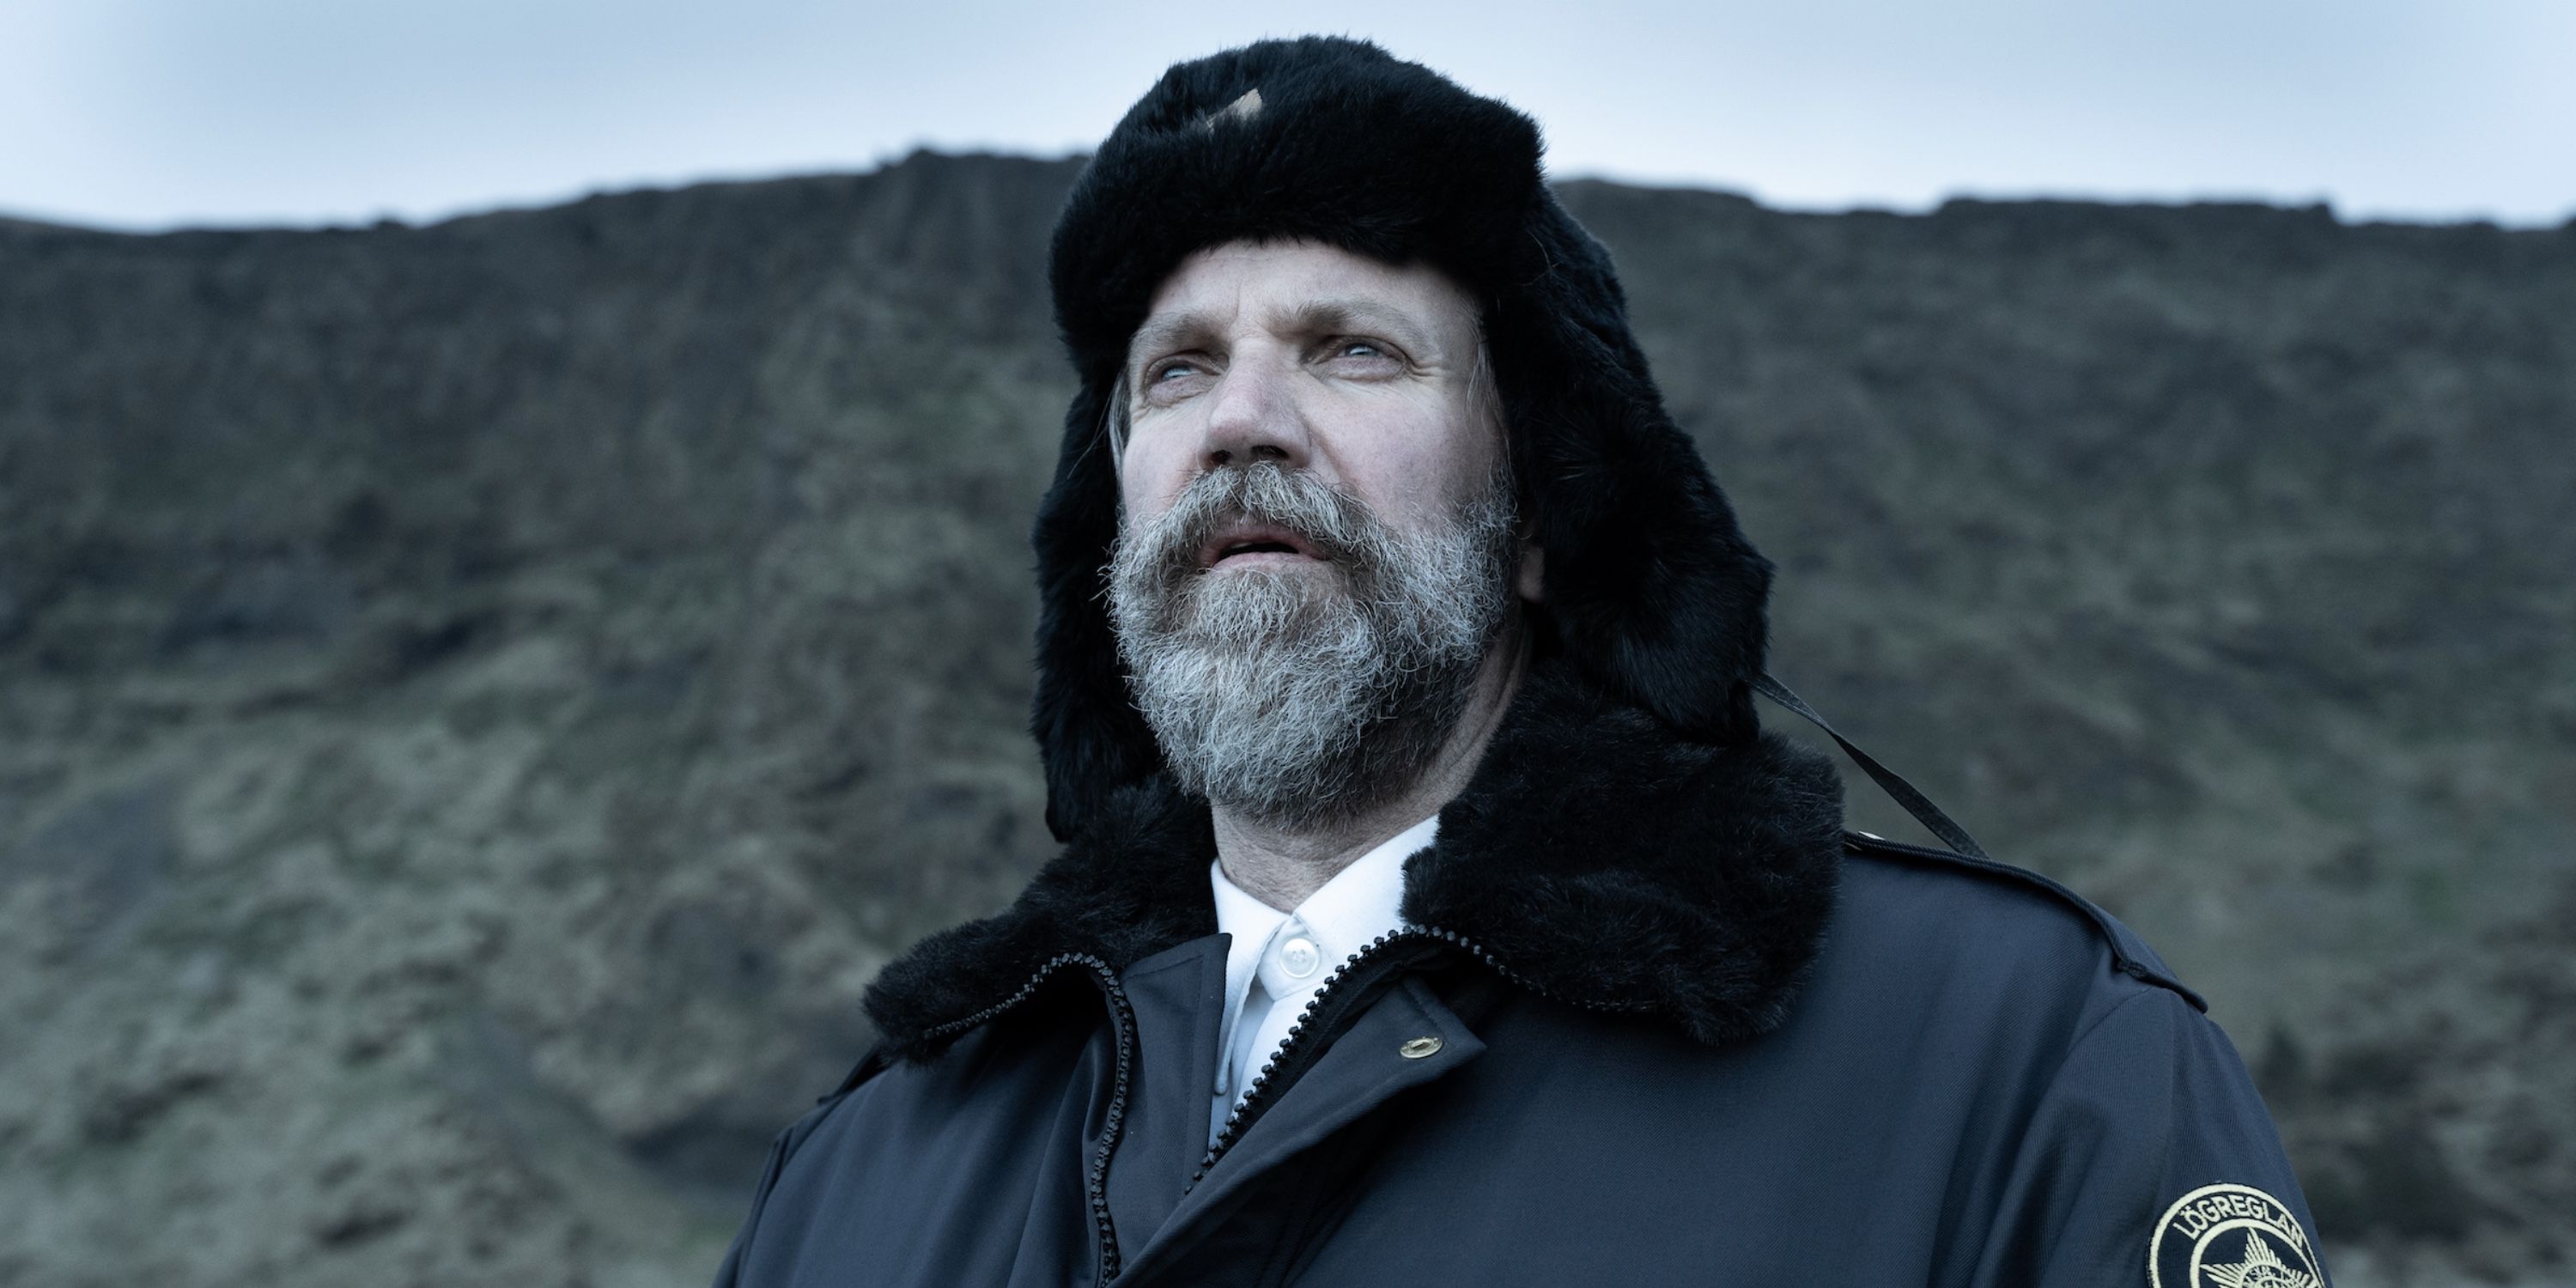 Þorsteinn Bachmann as Gísli in Katla on Netflix